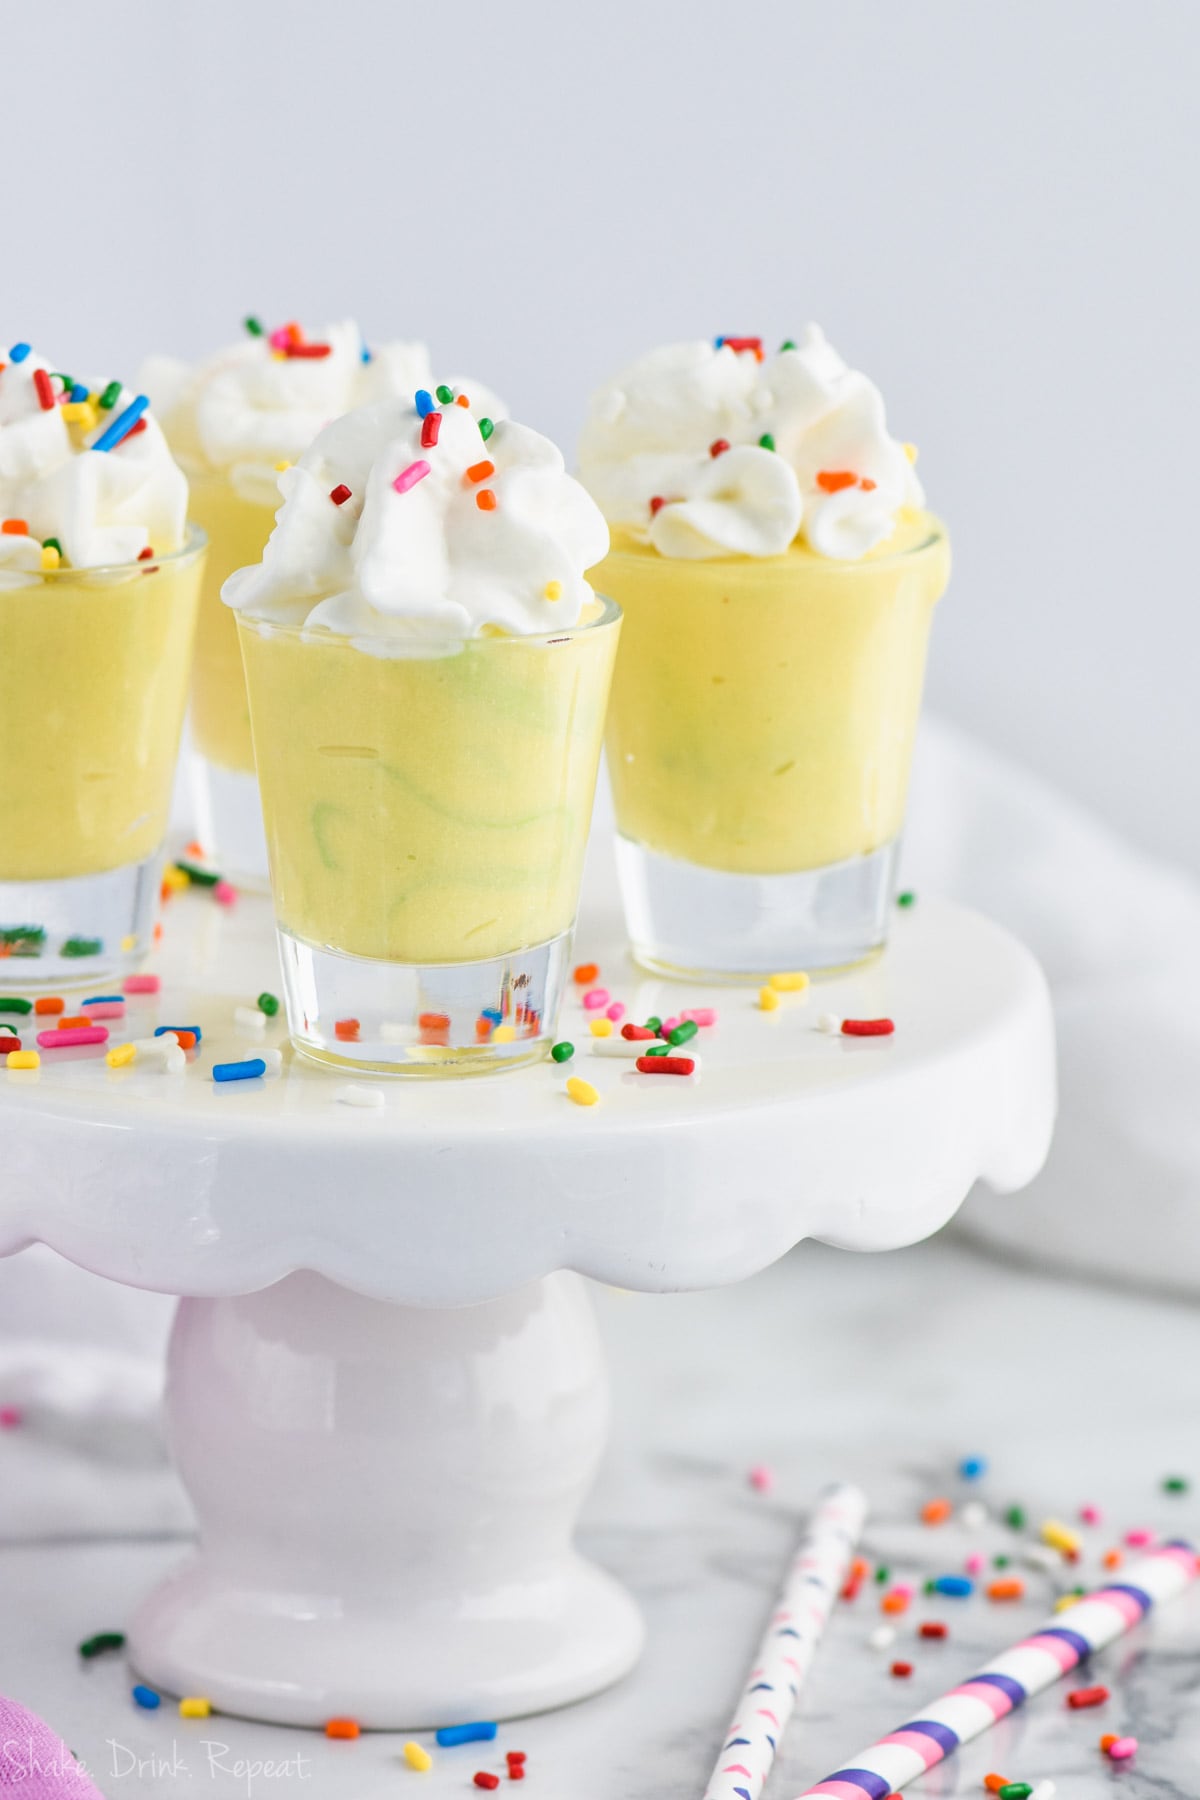 Birthday Cake Pudding Shots - Shake Drink Repeat